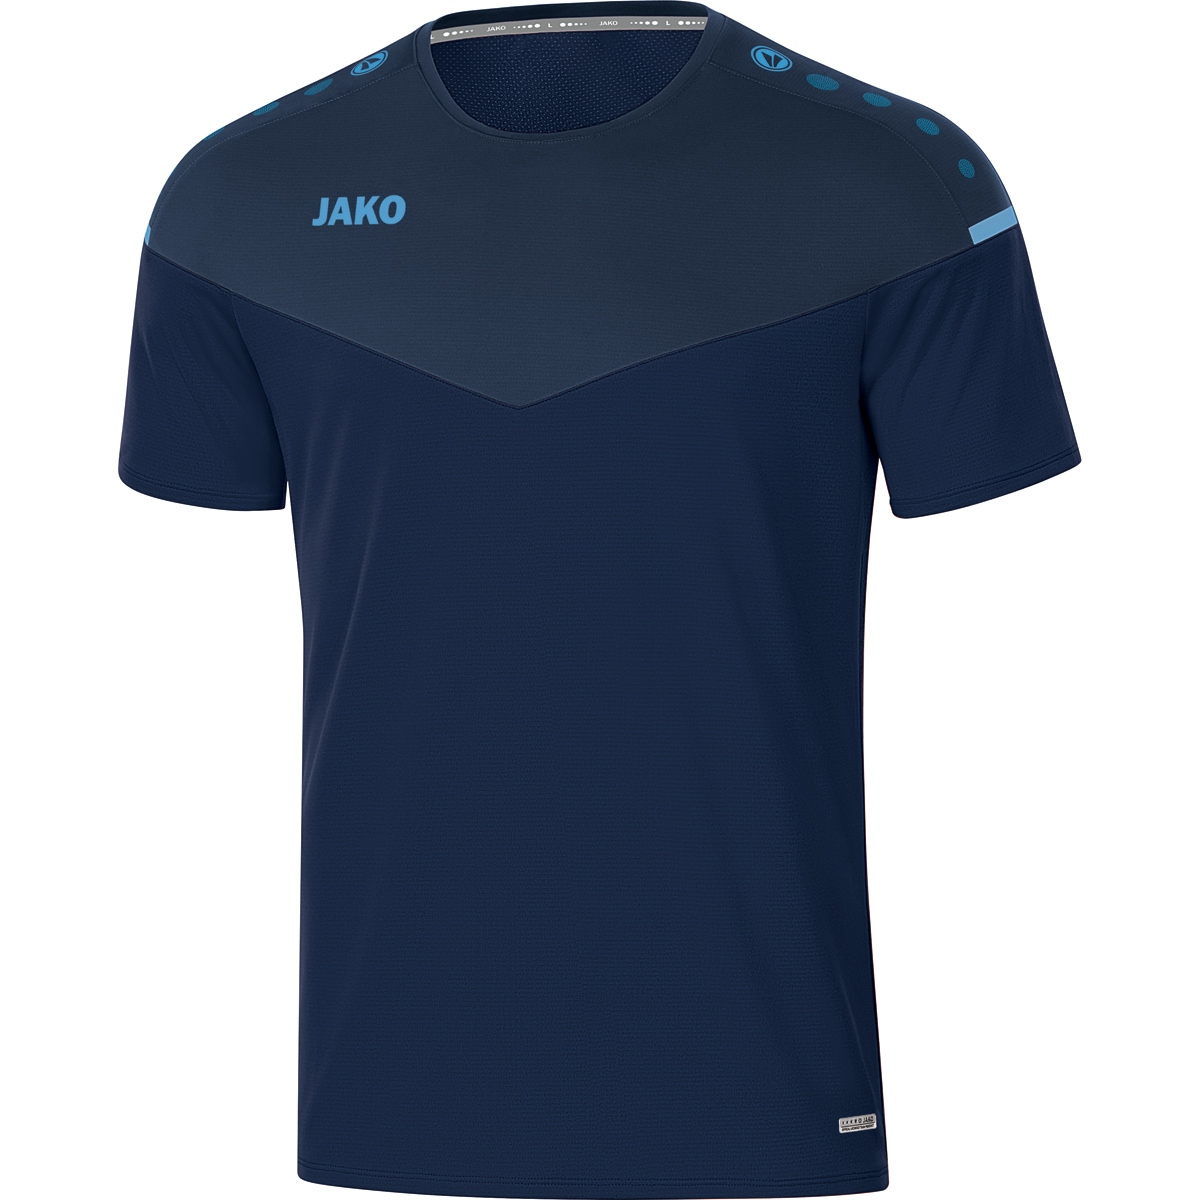 JAKO T-Shirt Champ 2.0 Gr. Herren, marine/darkblue/skyblue, 6120 L